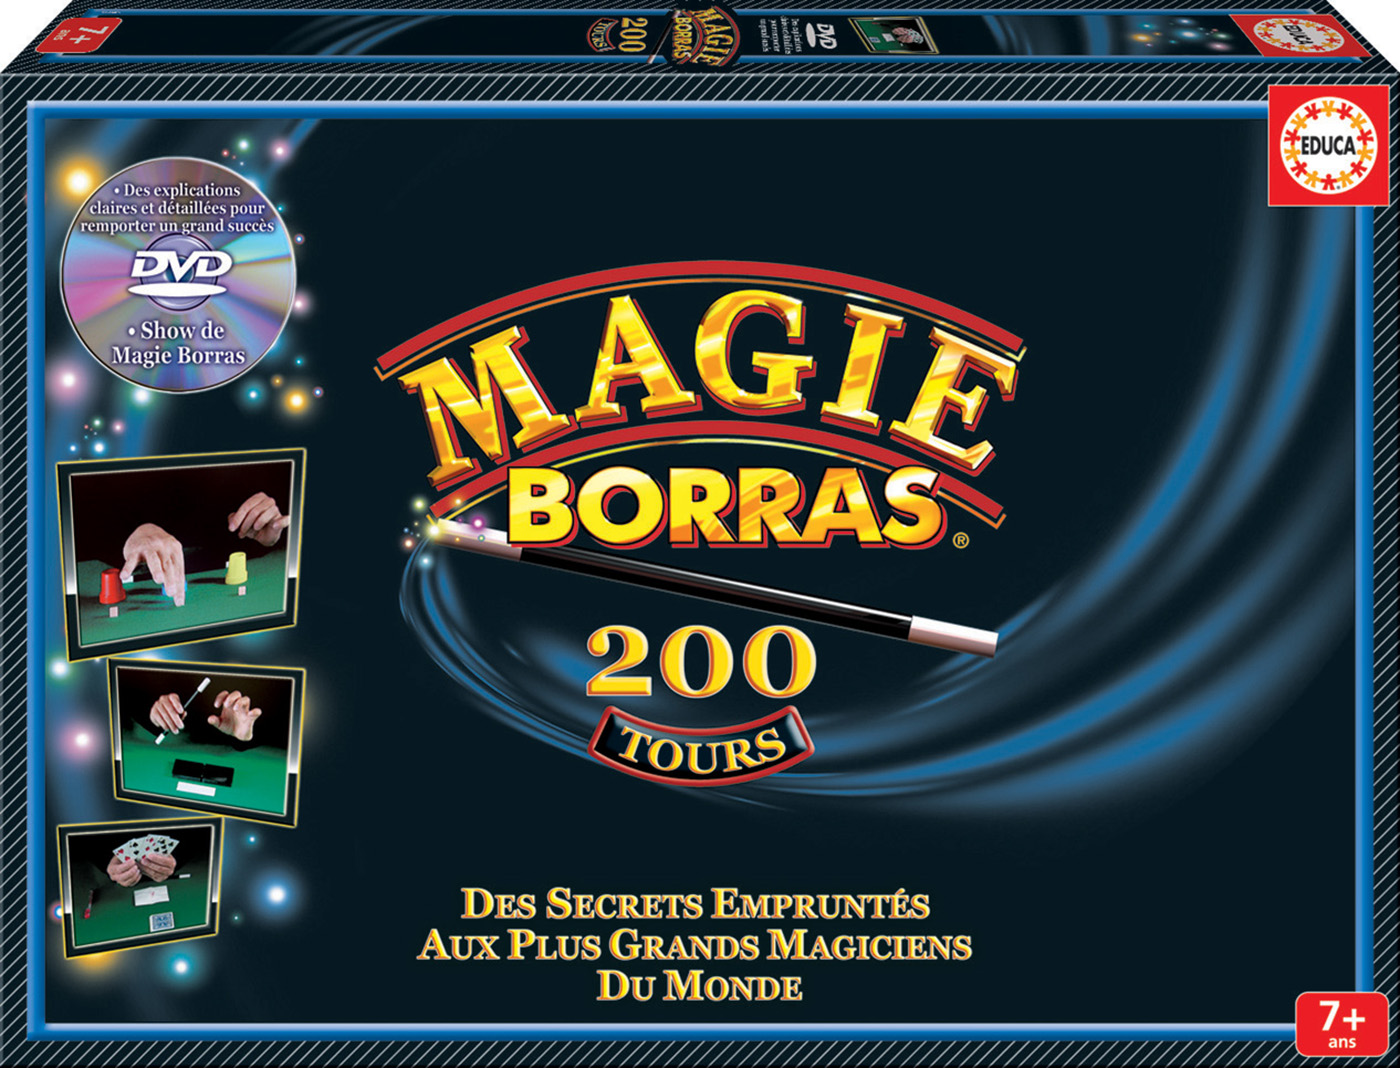 Magie Borras ® 200 tours